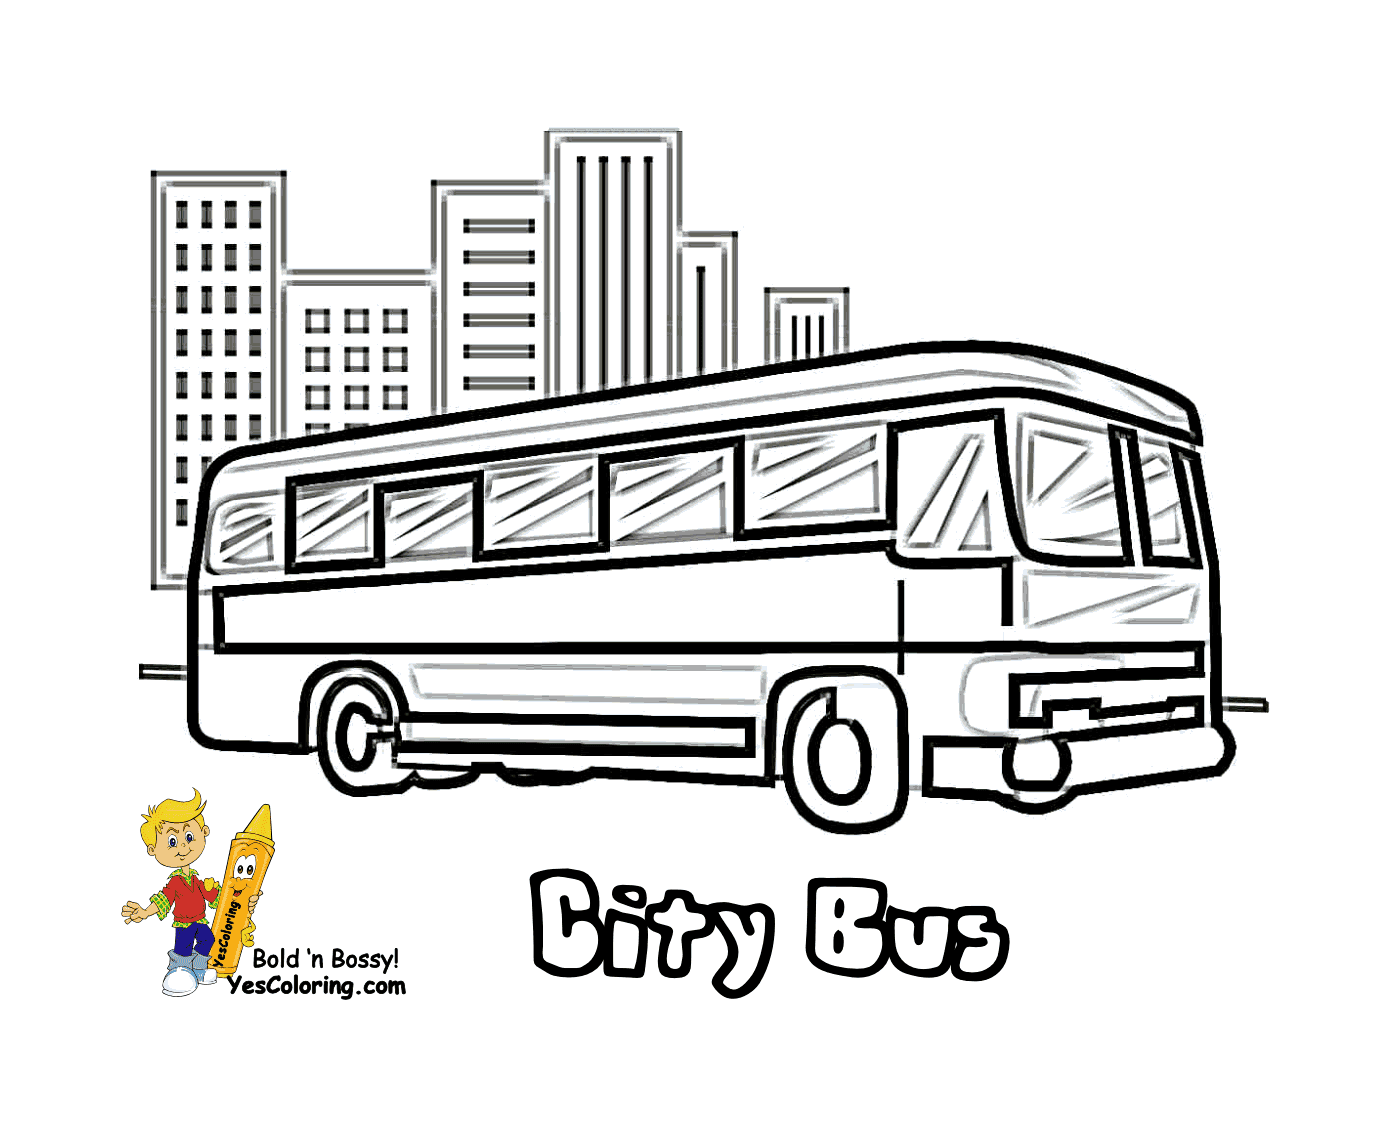  An urban bus runs around the city 